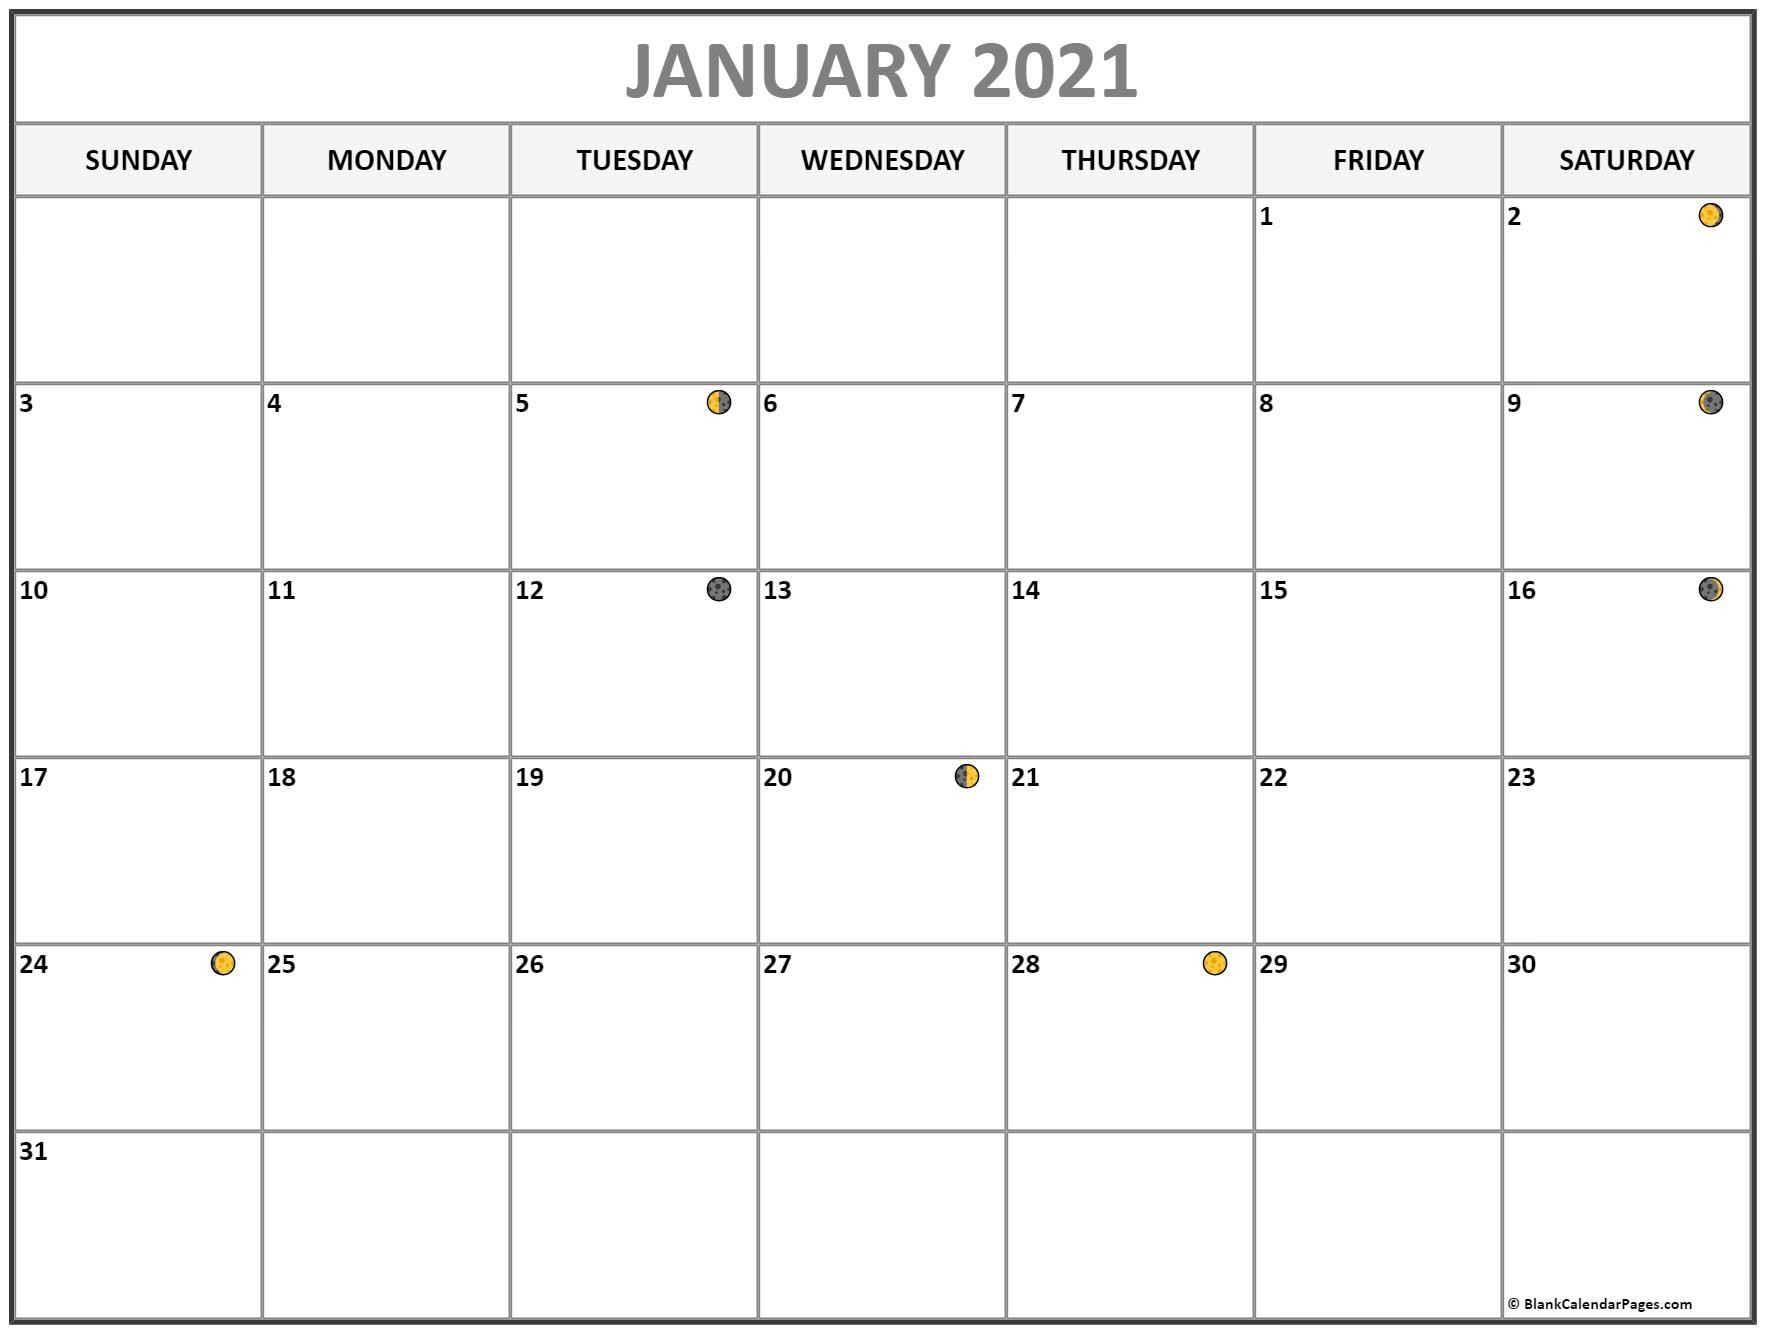 January 2021 Lunar Calendar | Moon Phase Calendar  Printable Lunar Calendar 2021